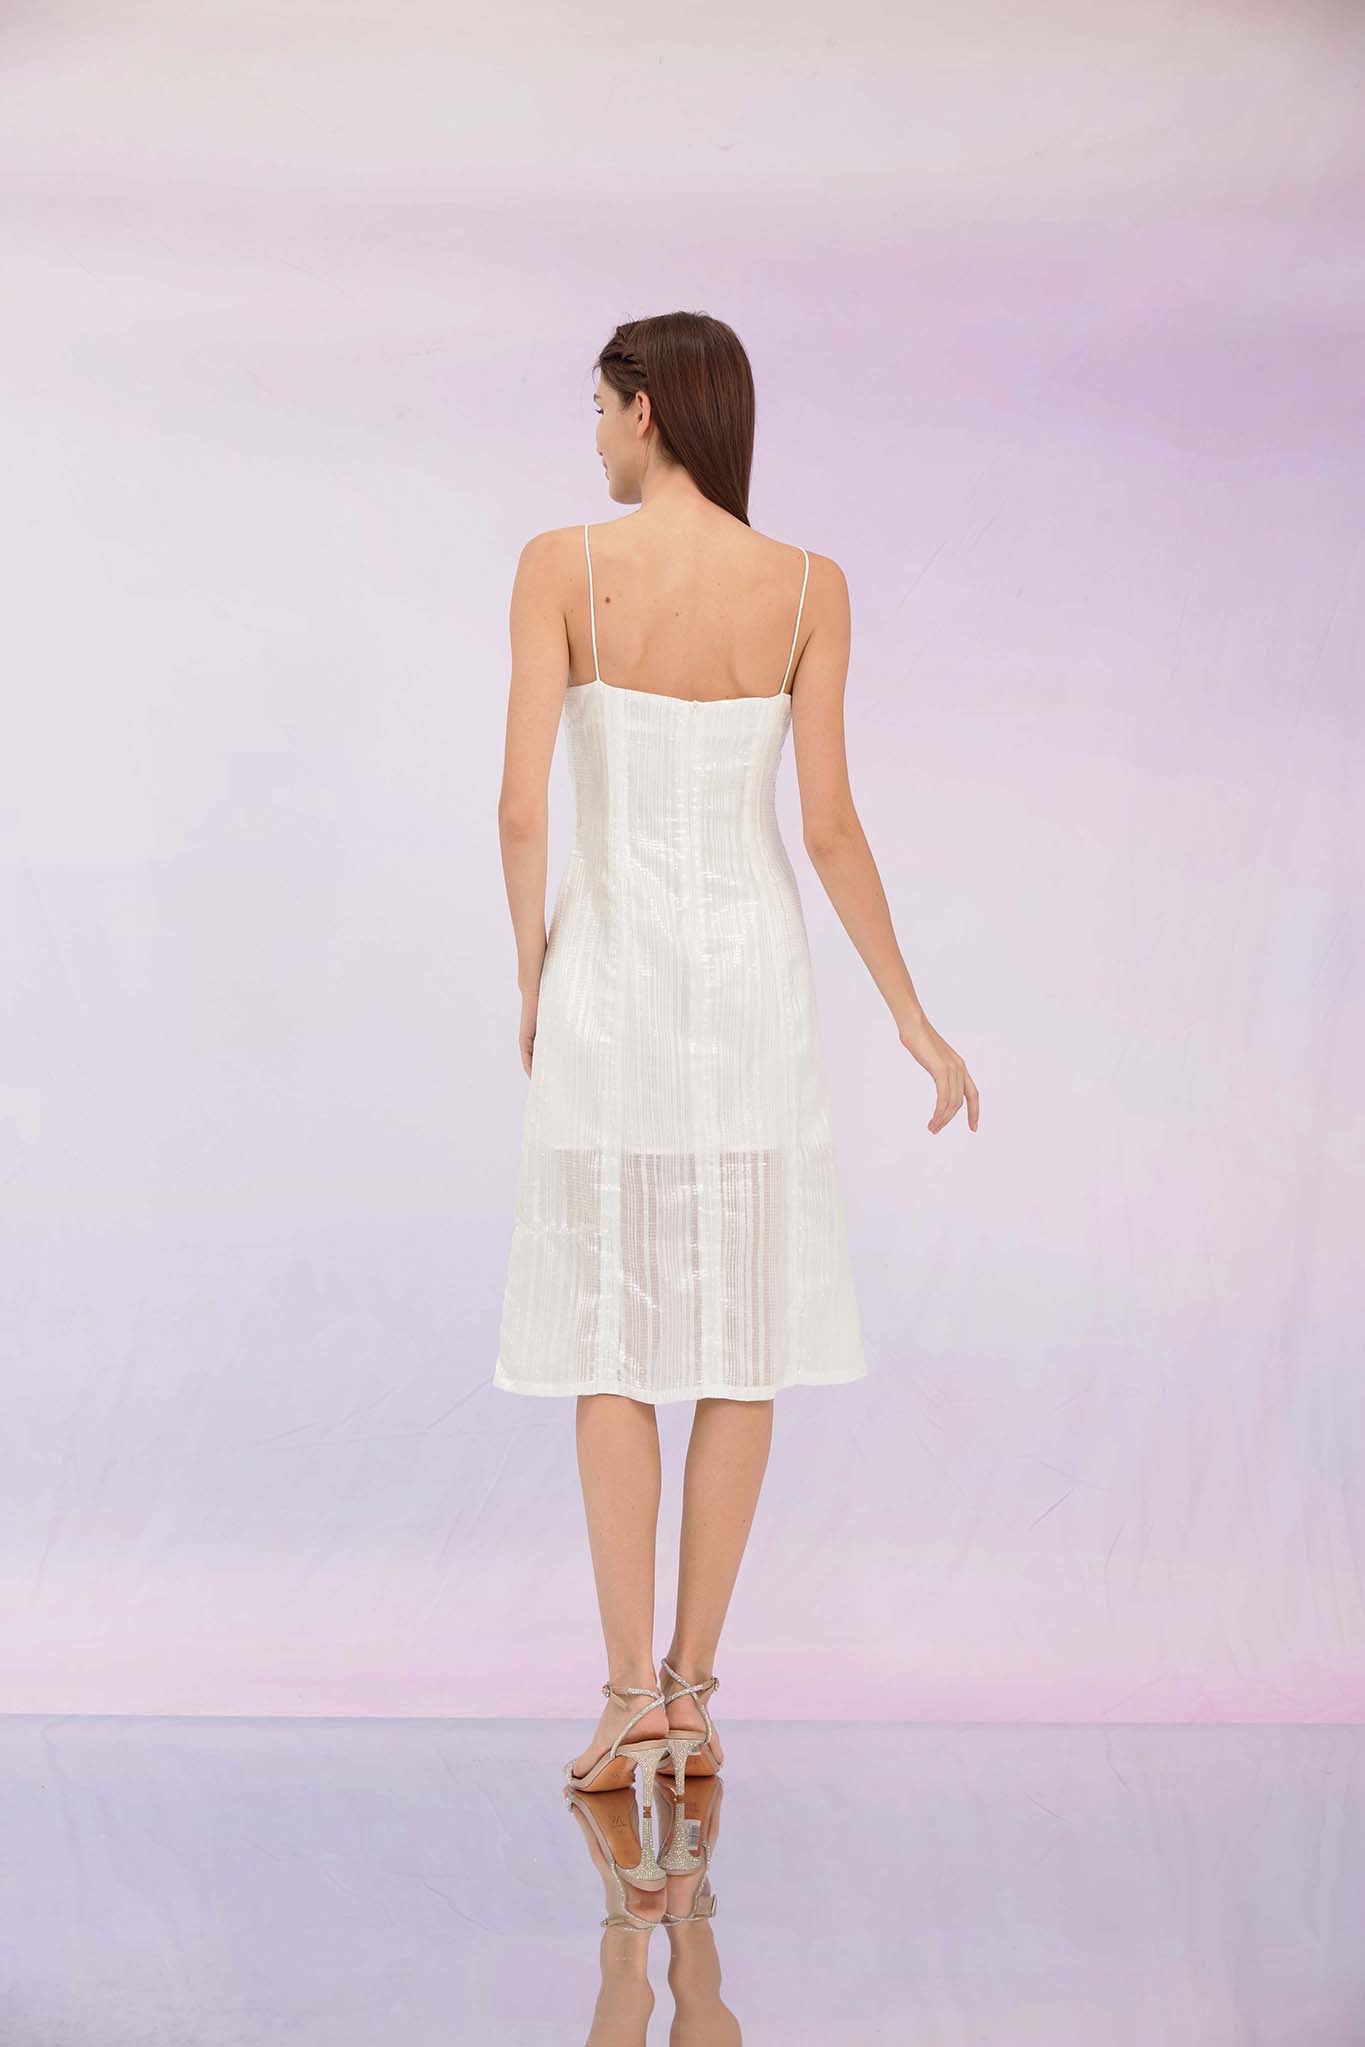 Germaine White Sequin Slip Dress